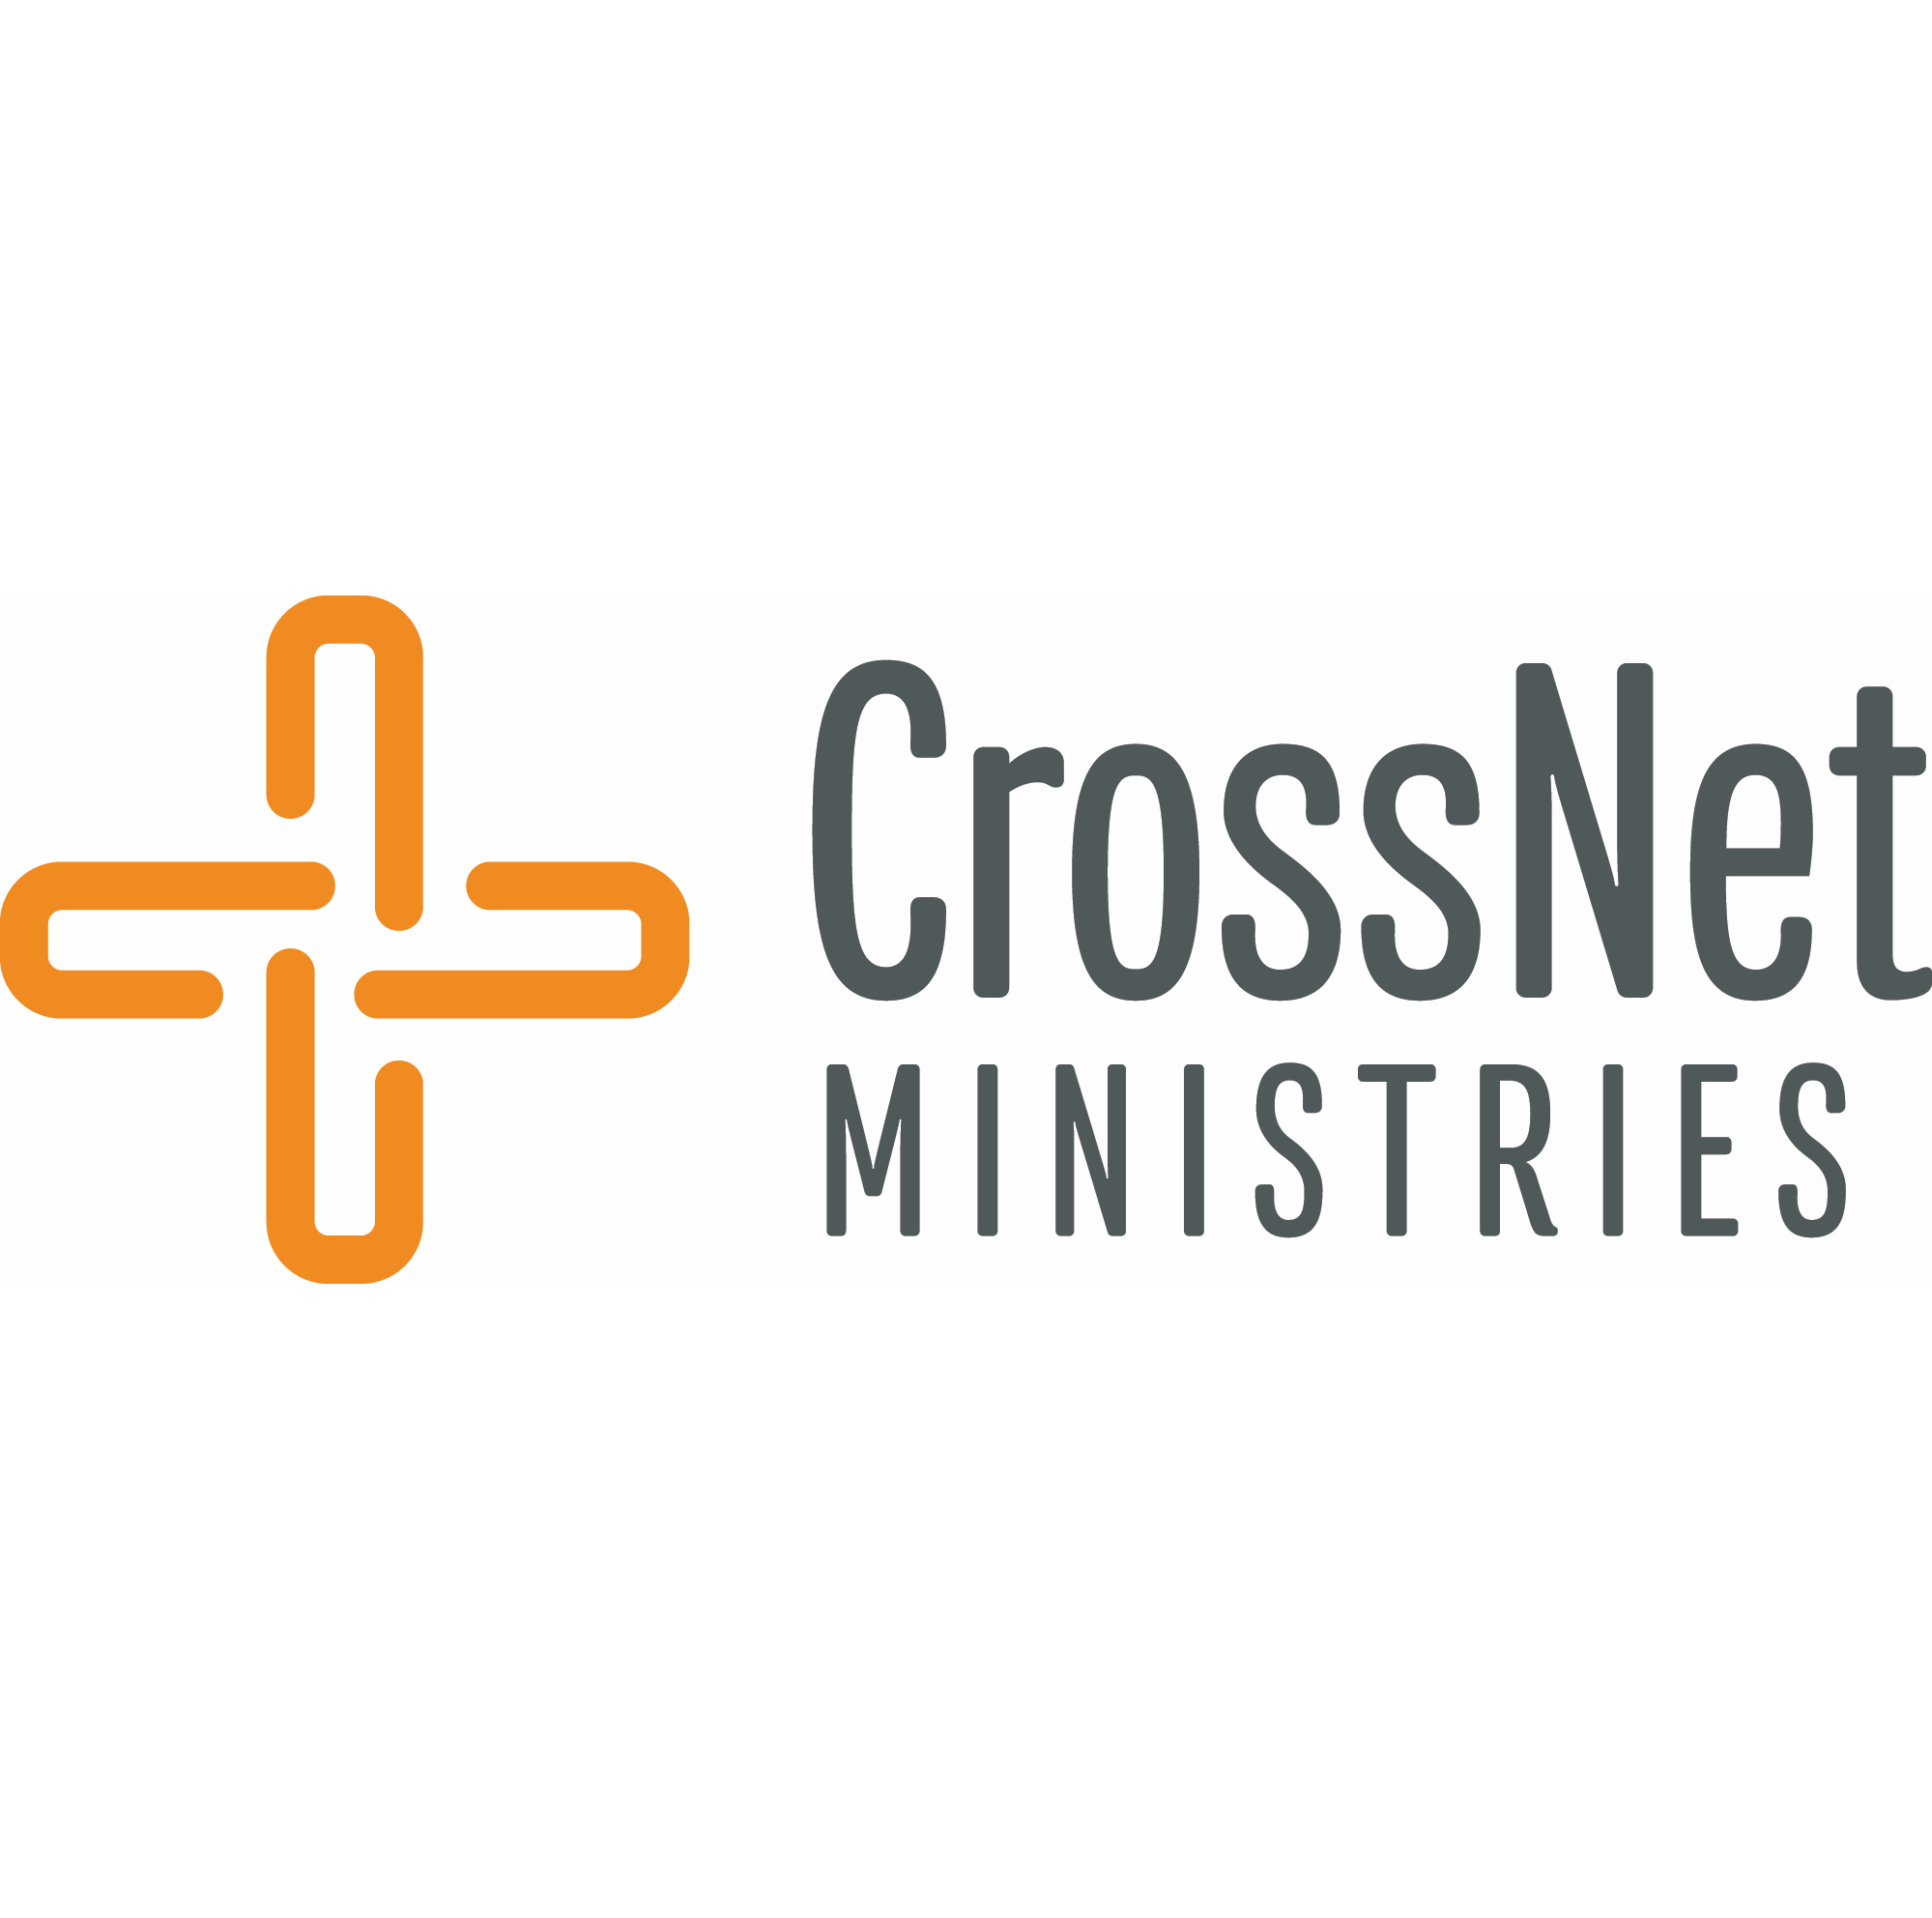 CrossNet Ministries Logo